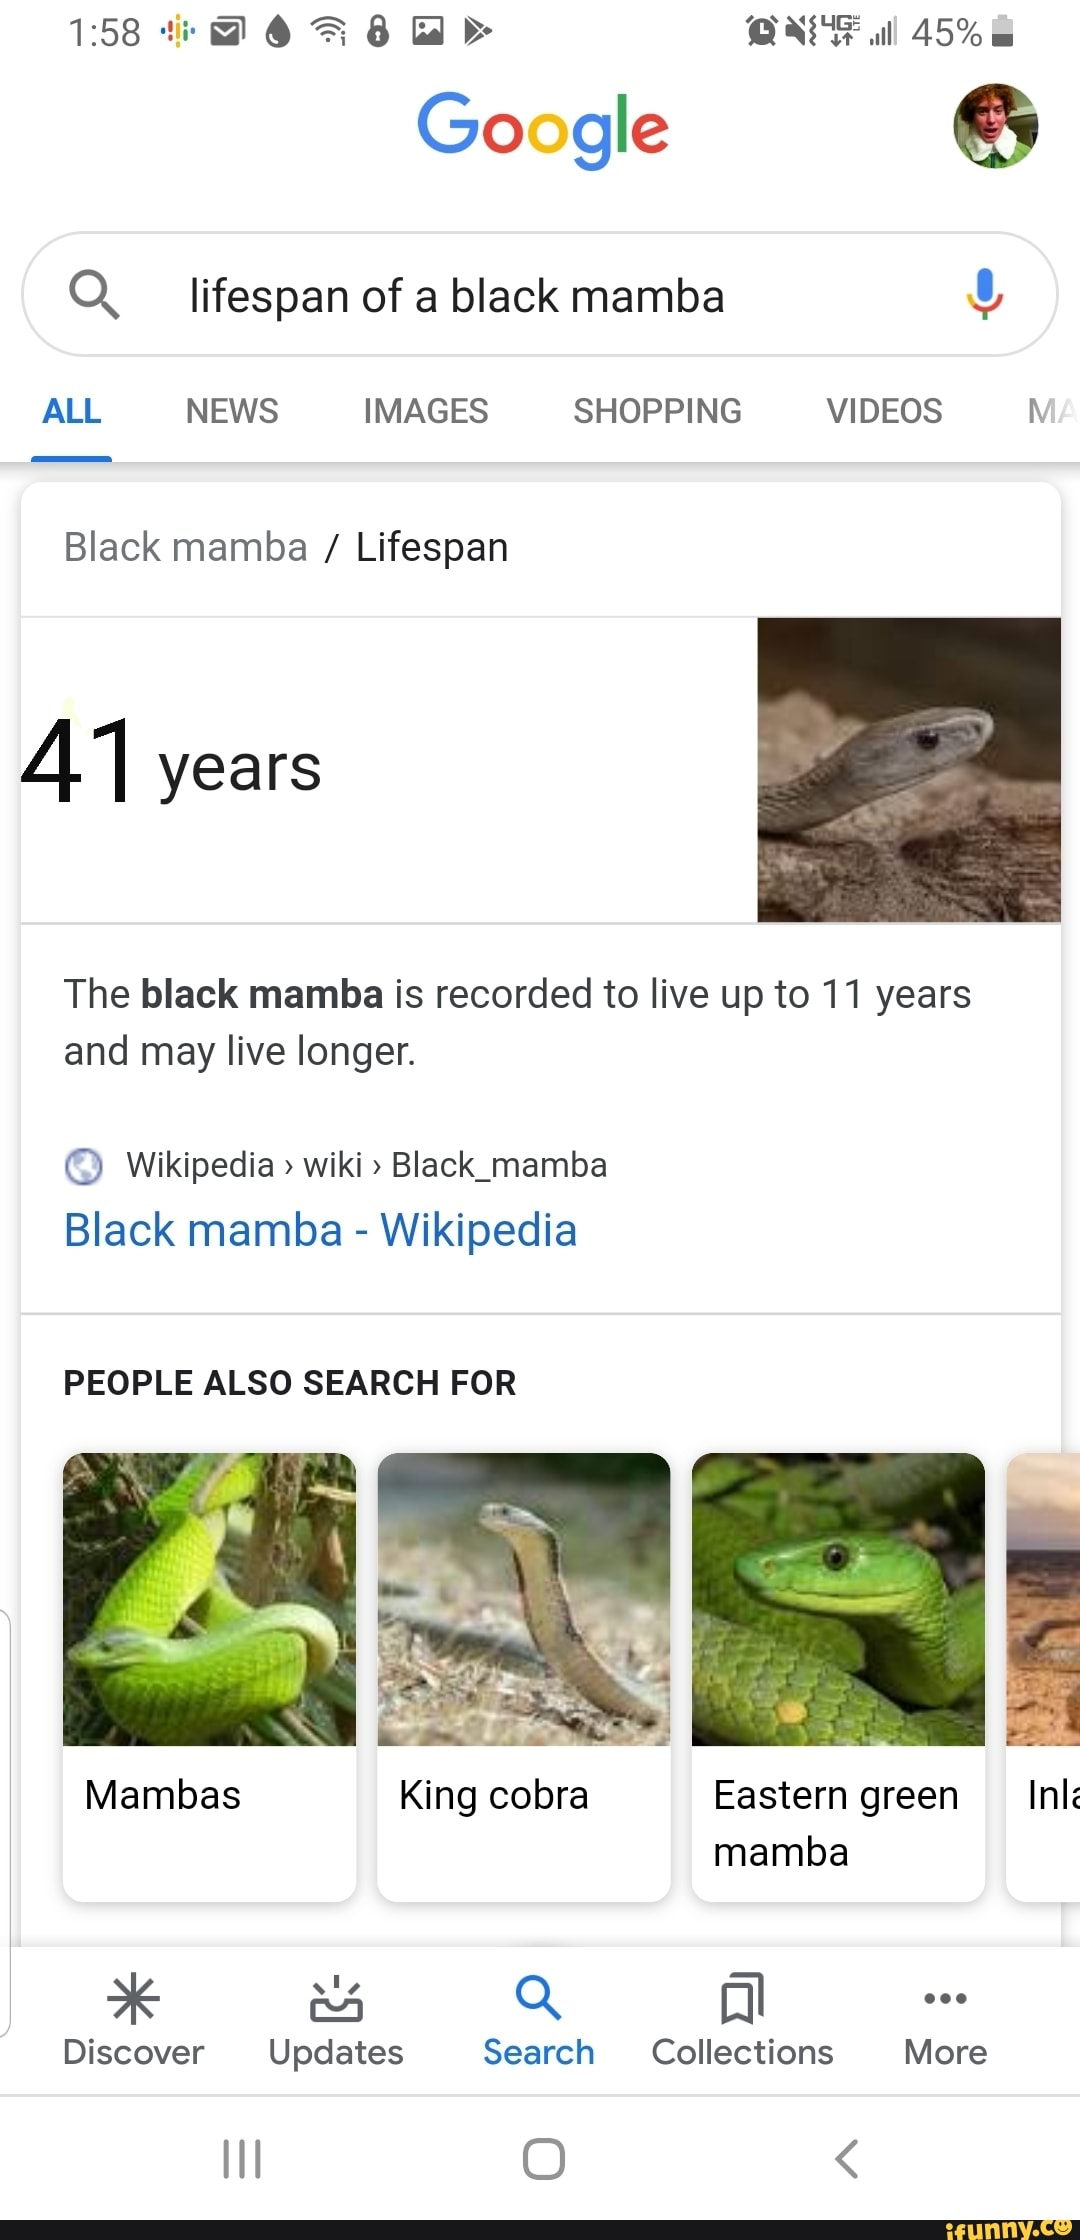 Eastern green mamba - Wikipedia